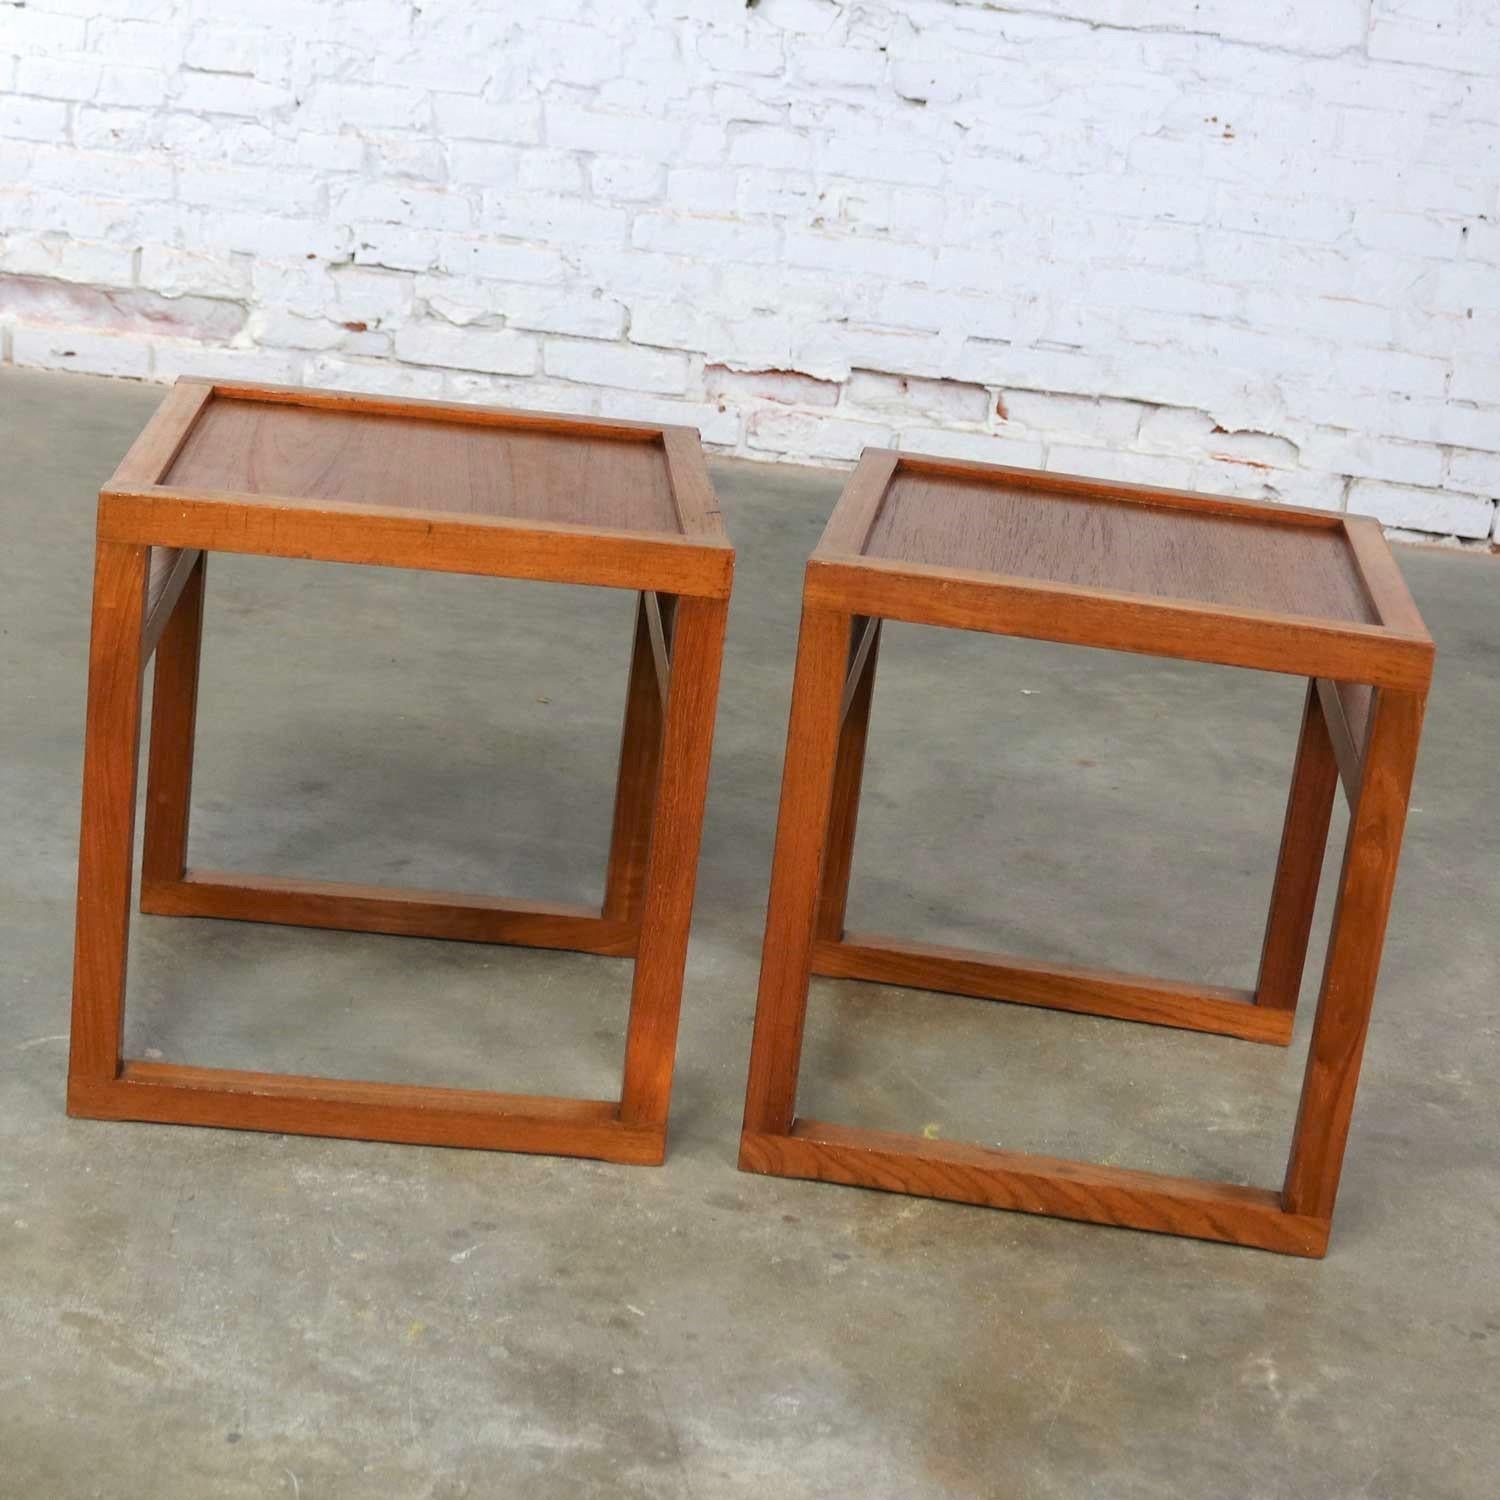 20th Century Vintage Scandinavian Modern Pair of Square Open Cube Side Tables in Teak